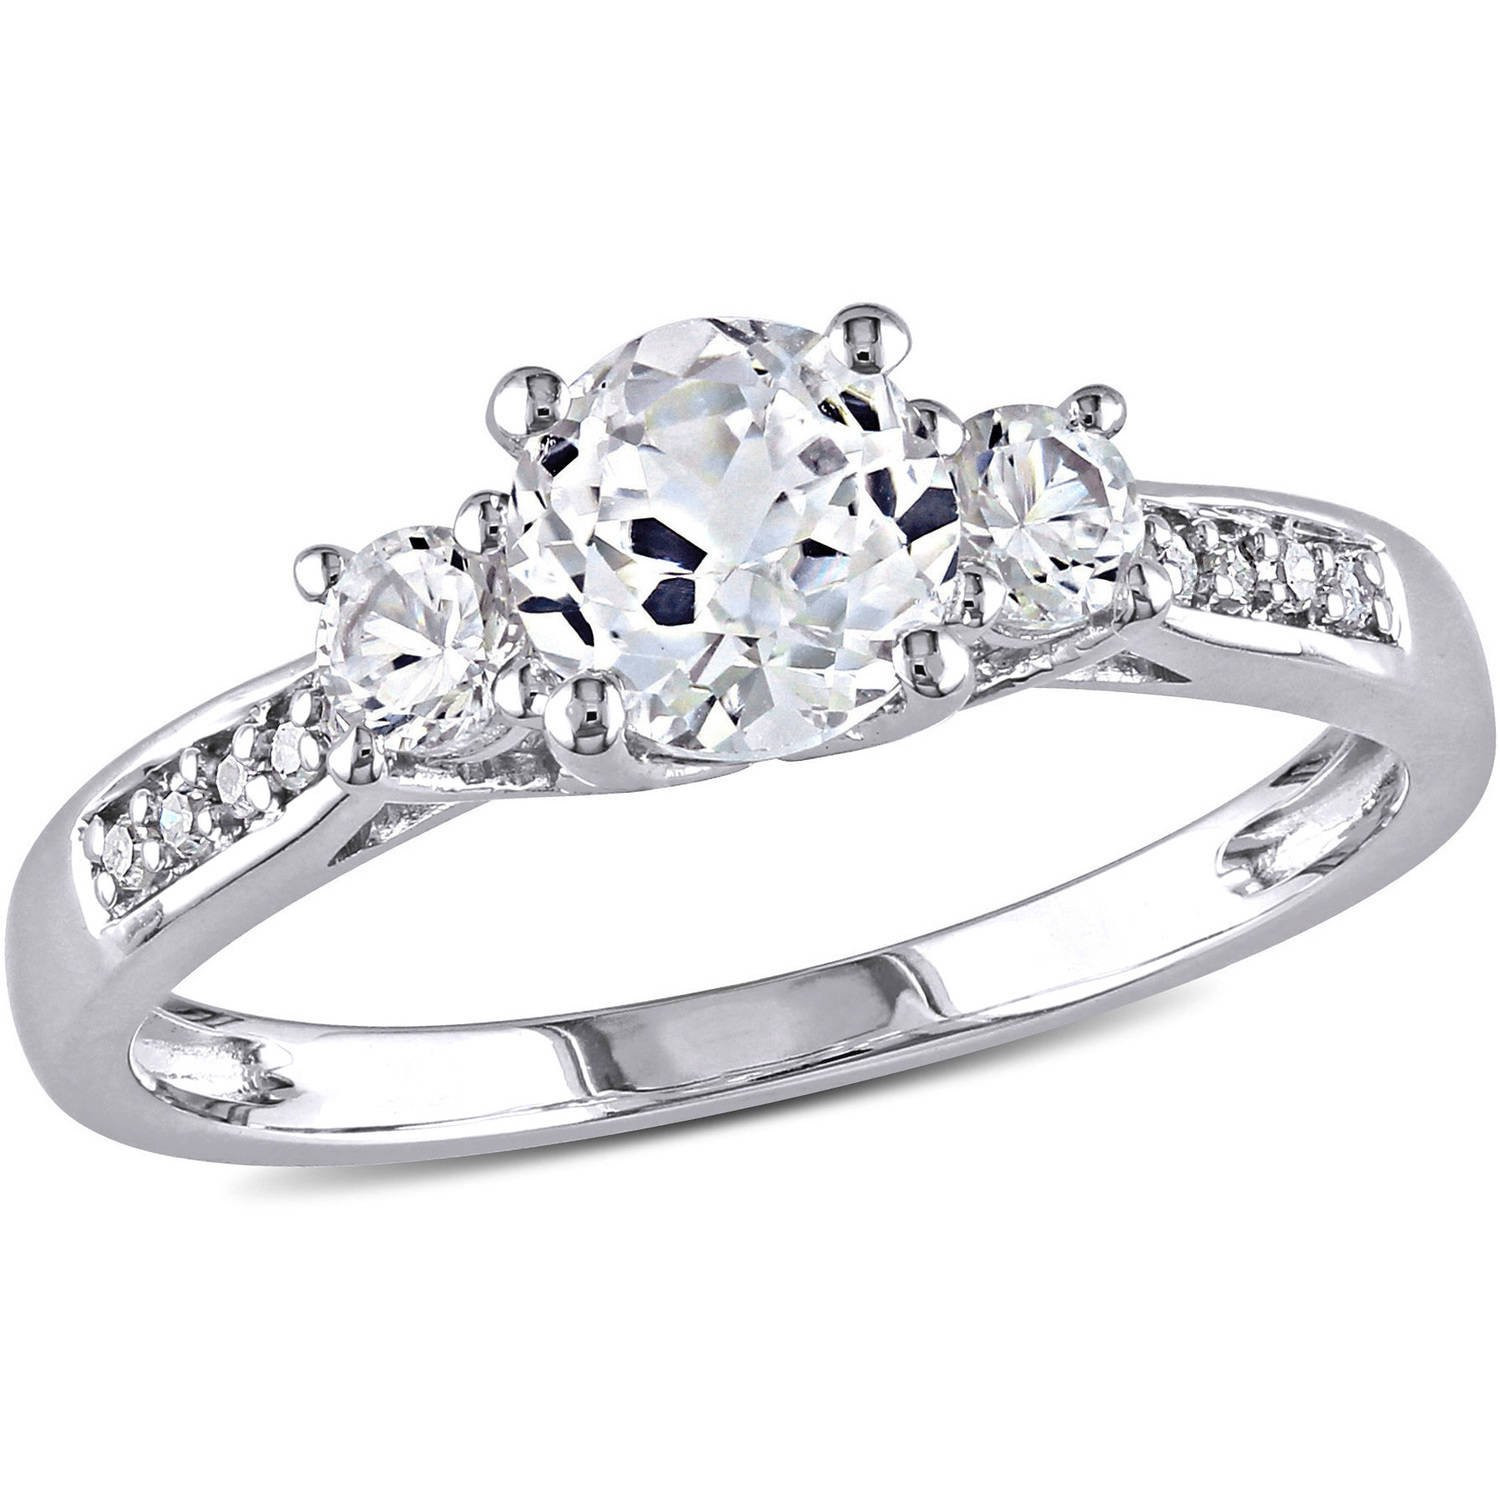 Diamond Rings At Walmart
 Miabella 1 10 Carat T W Princess Cut Diamond Sterling